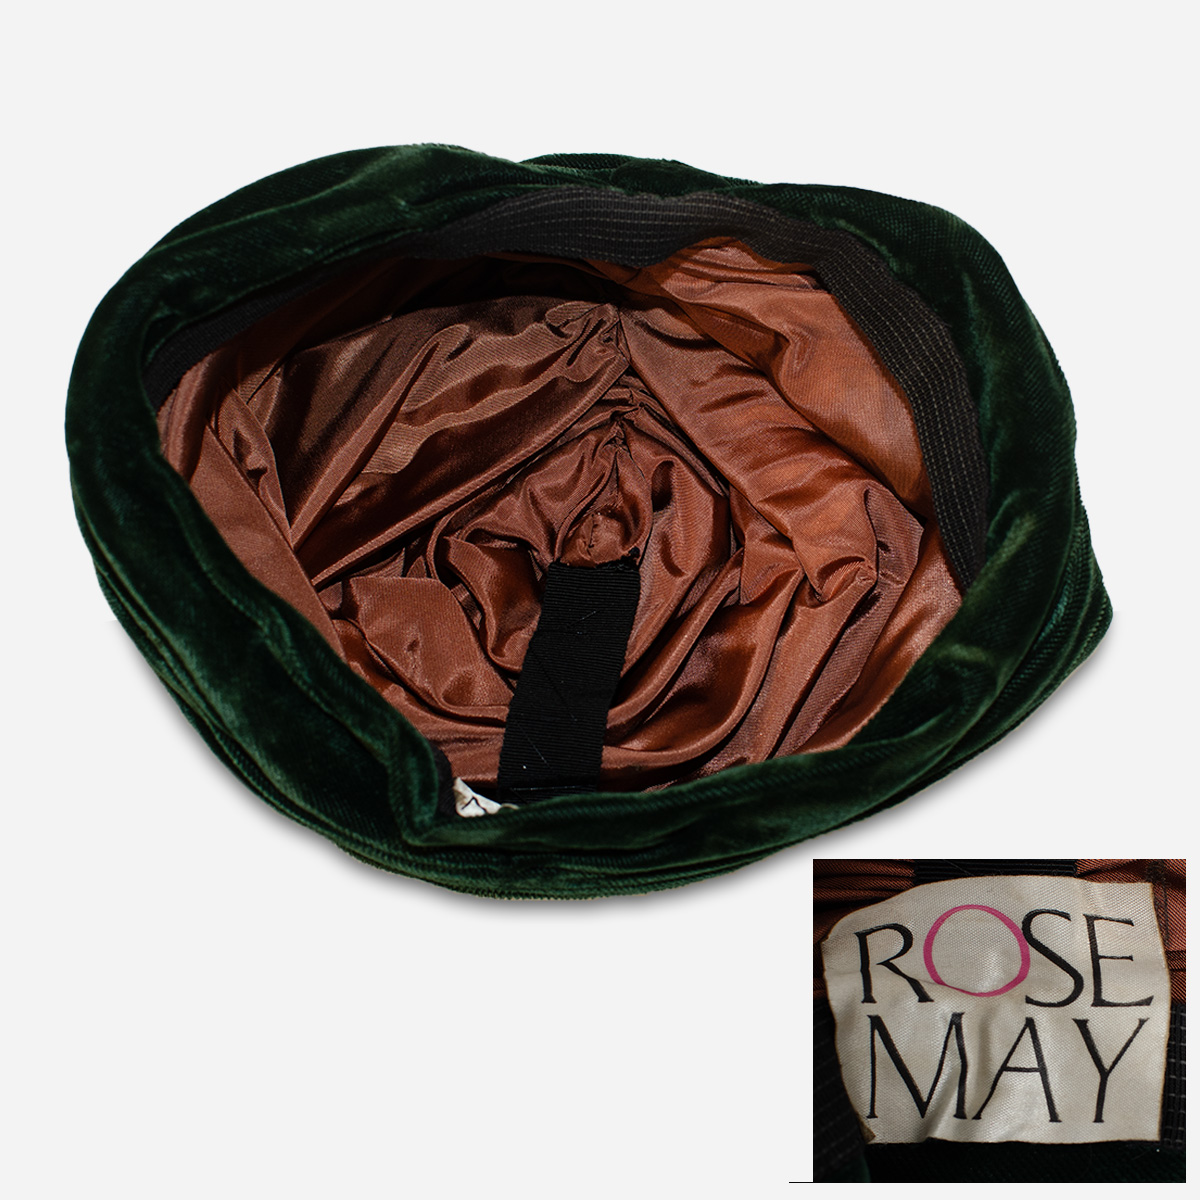 rose may hat label